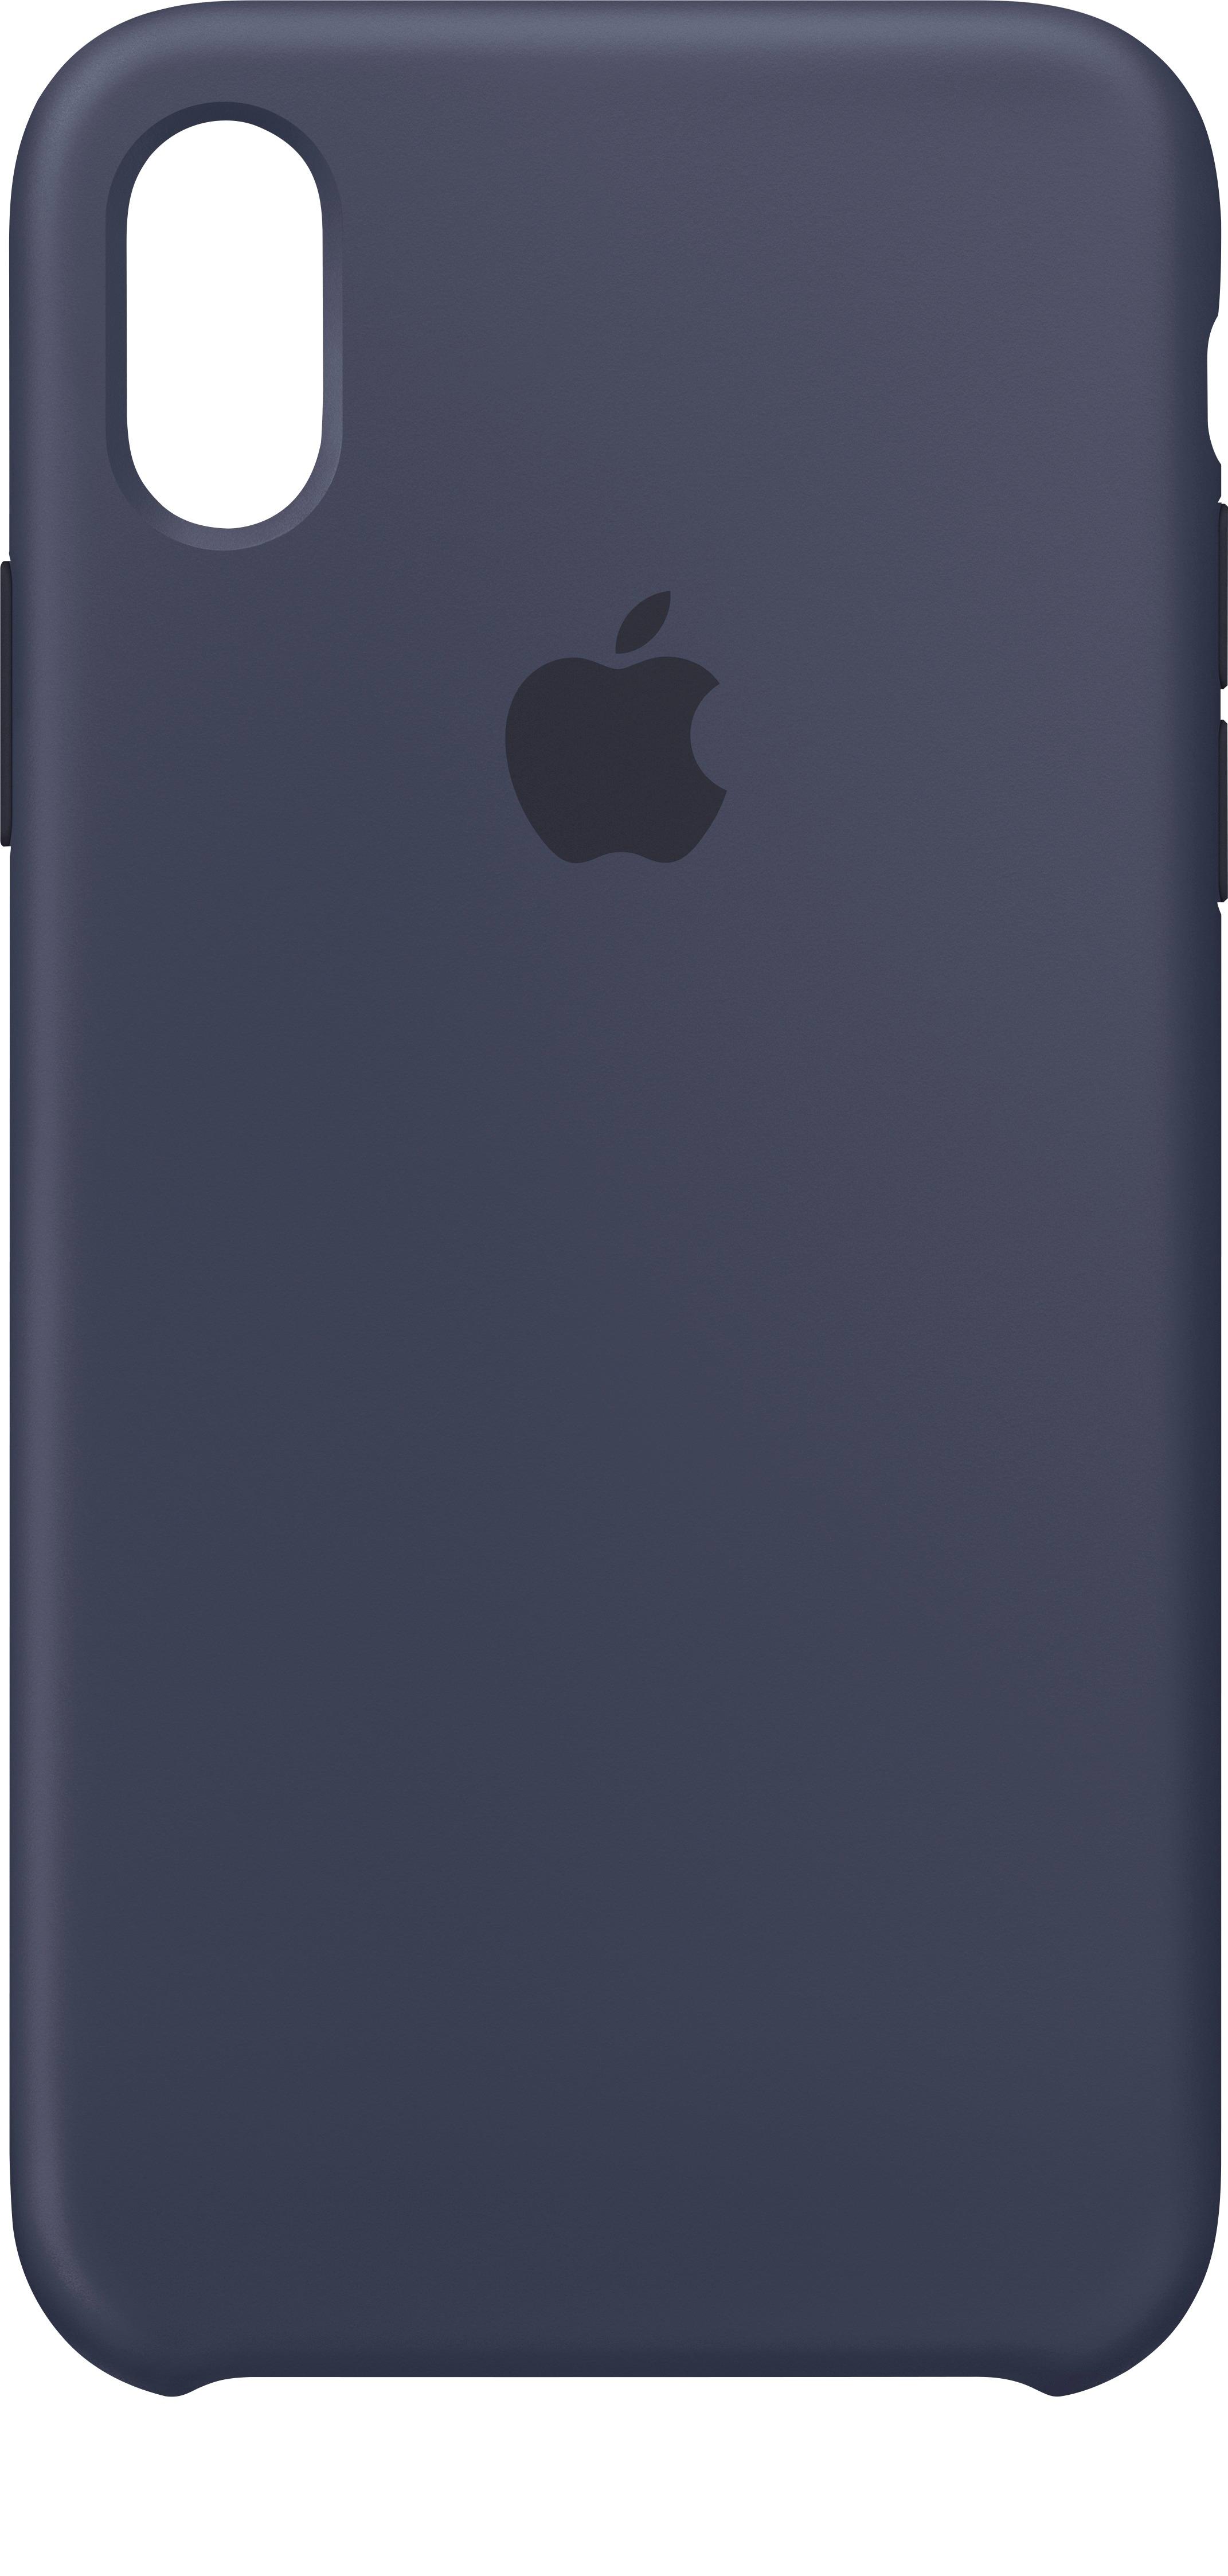 Ontwaken oorlog Archeoloog Apple iPhone® X Silicone Case Midnight Blue 010KF0703 - Best Buy